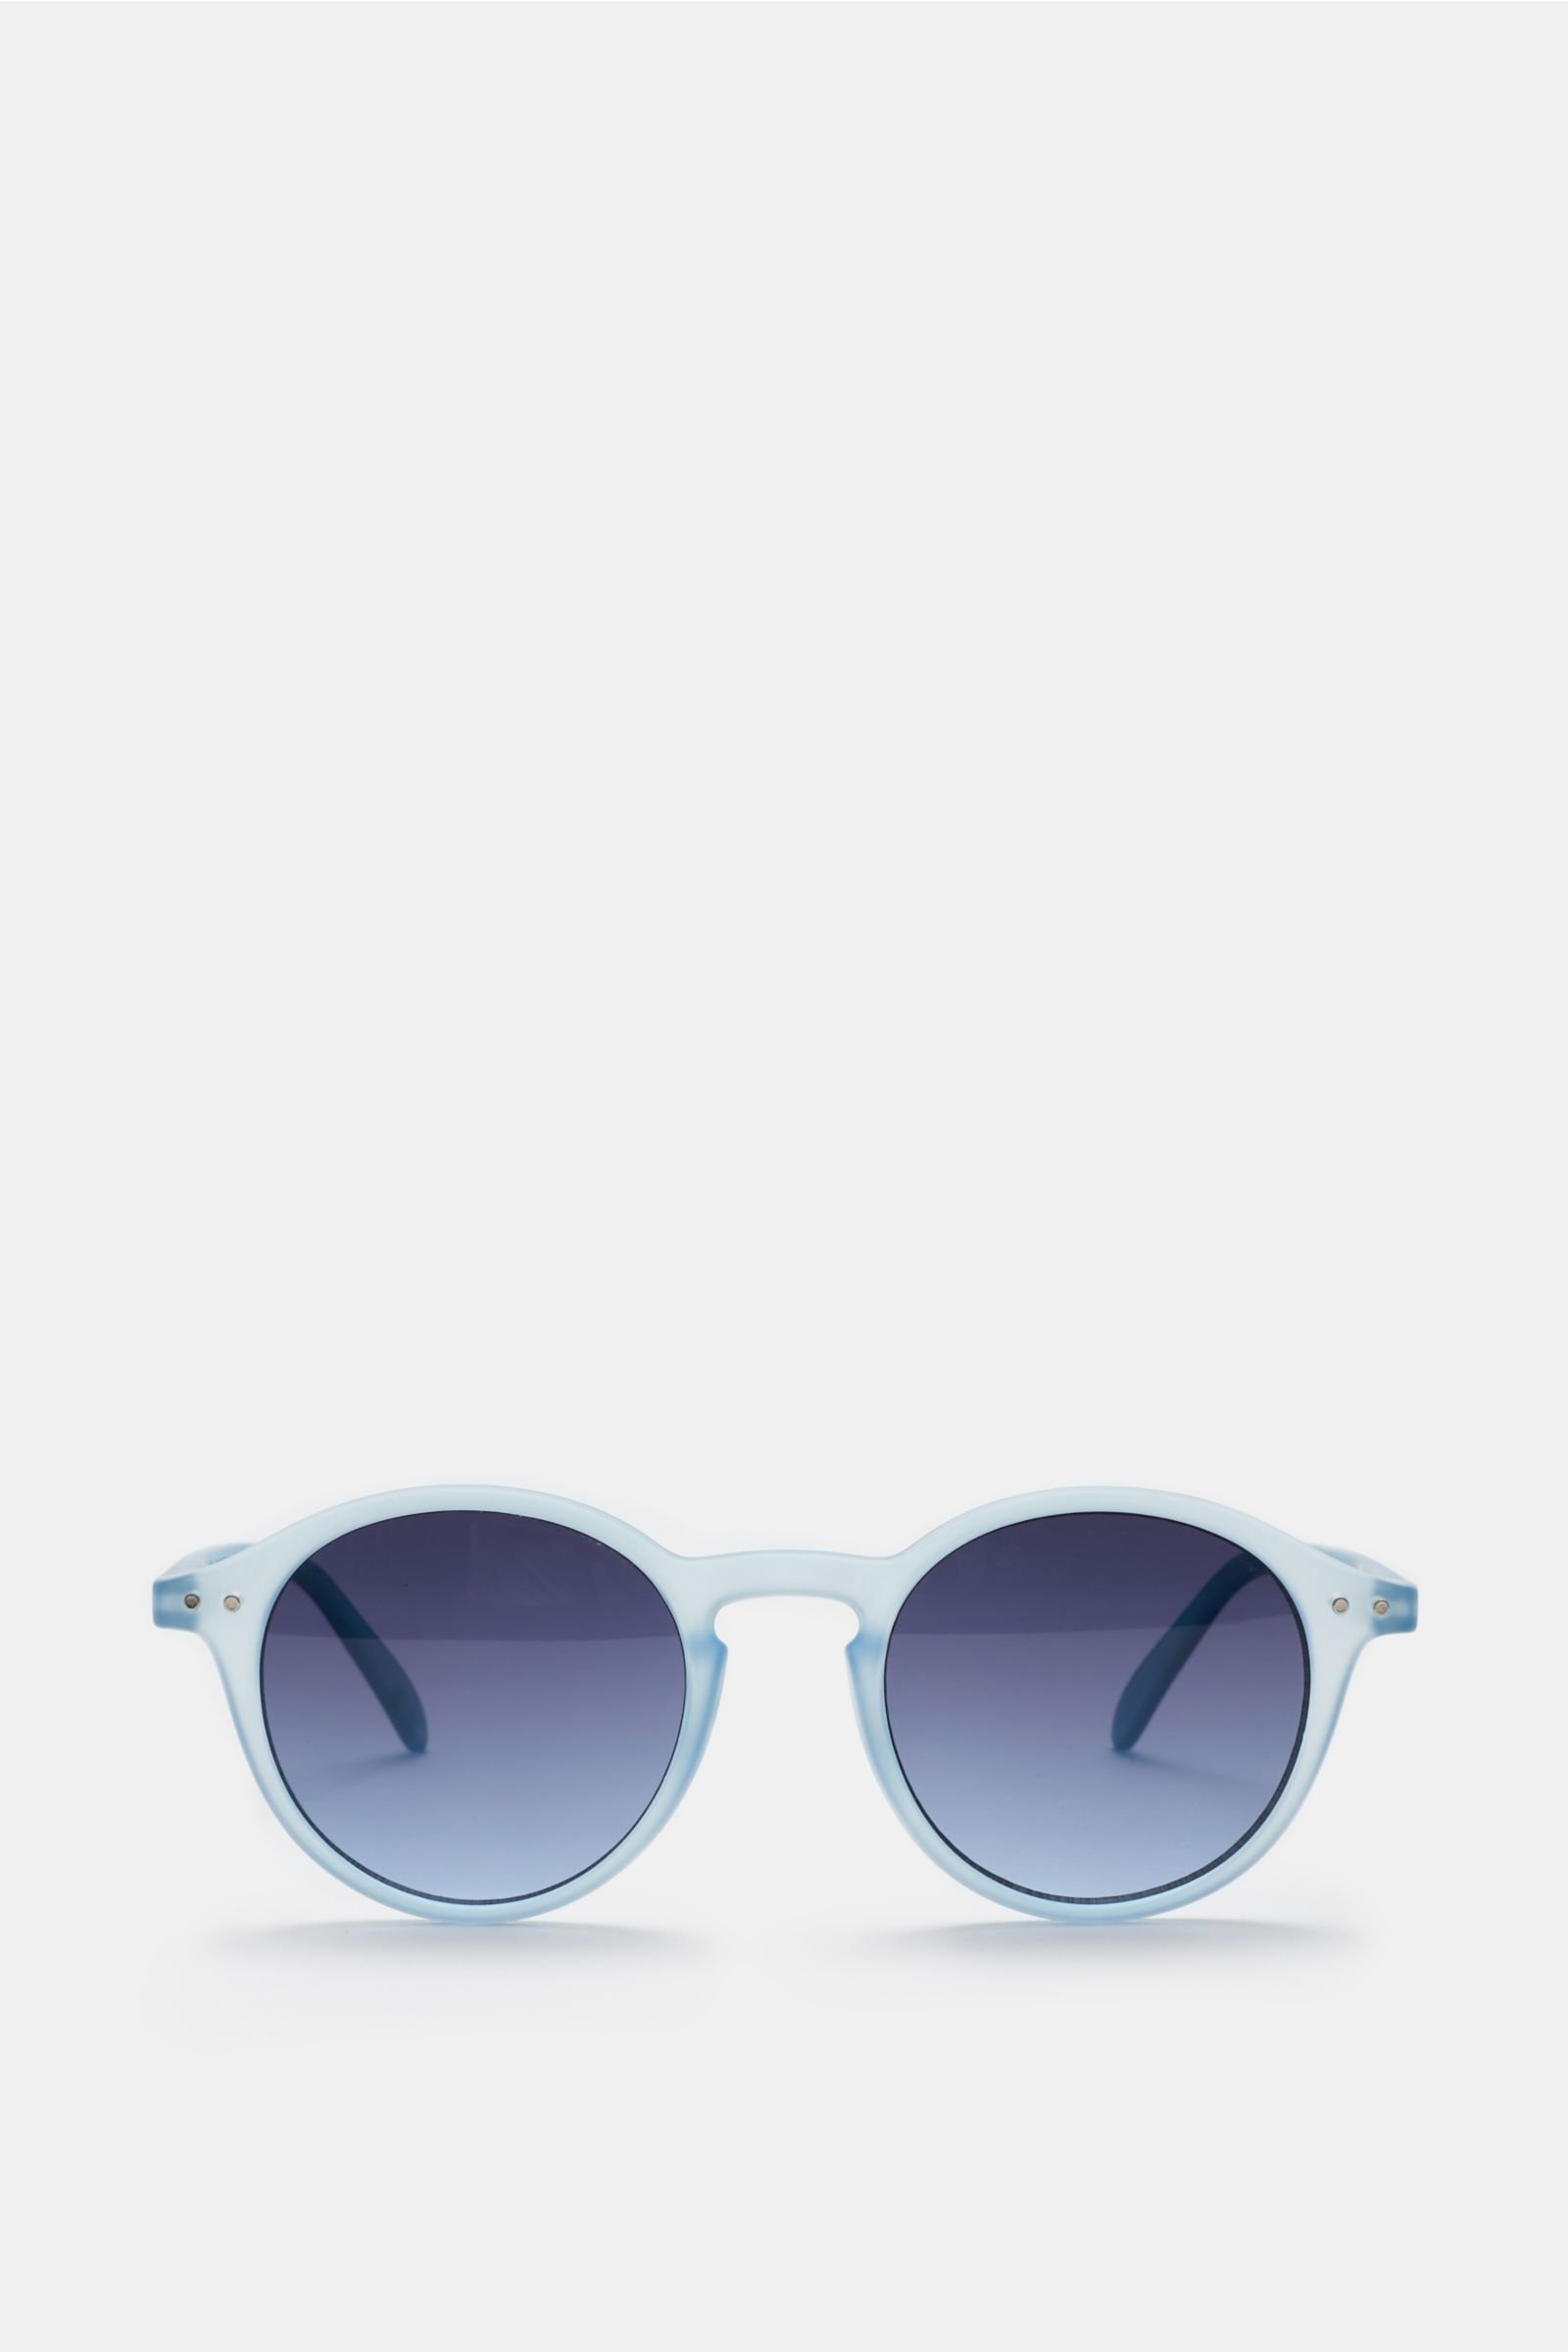 Sunglasses '#D Bloom' light blue/blue